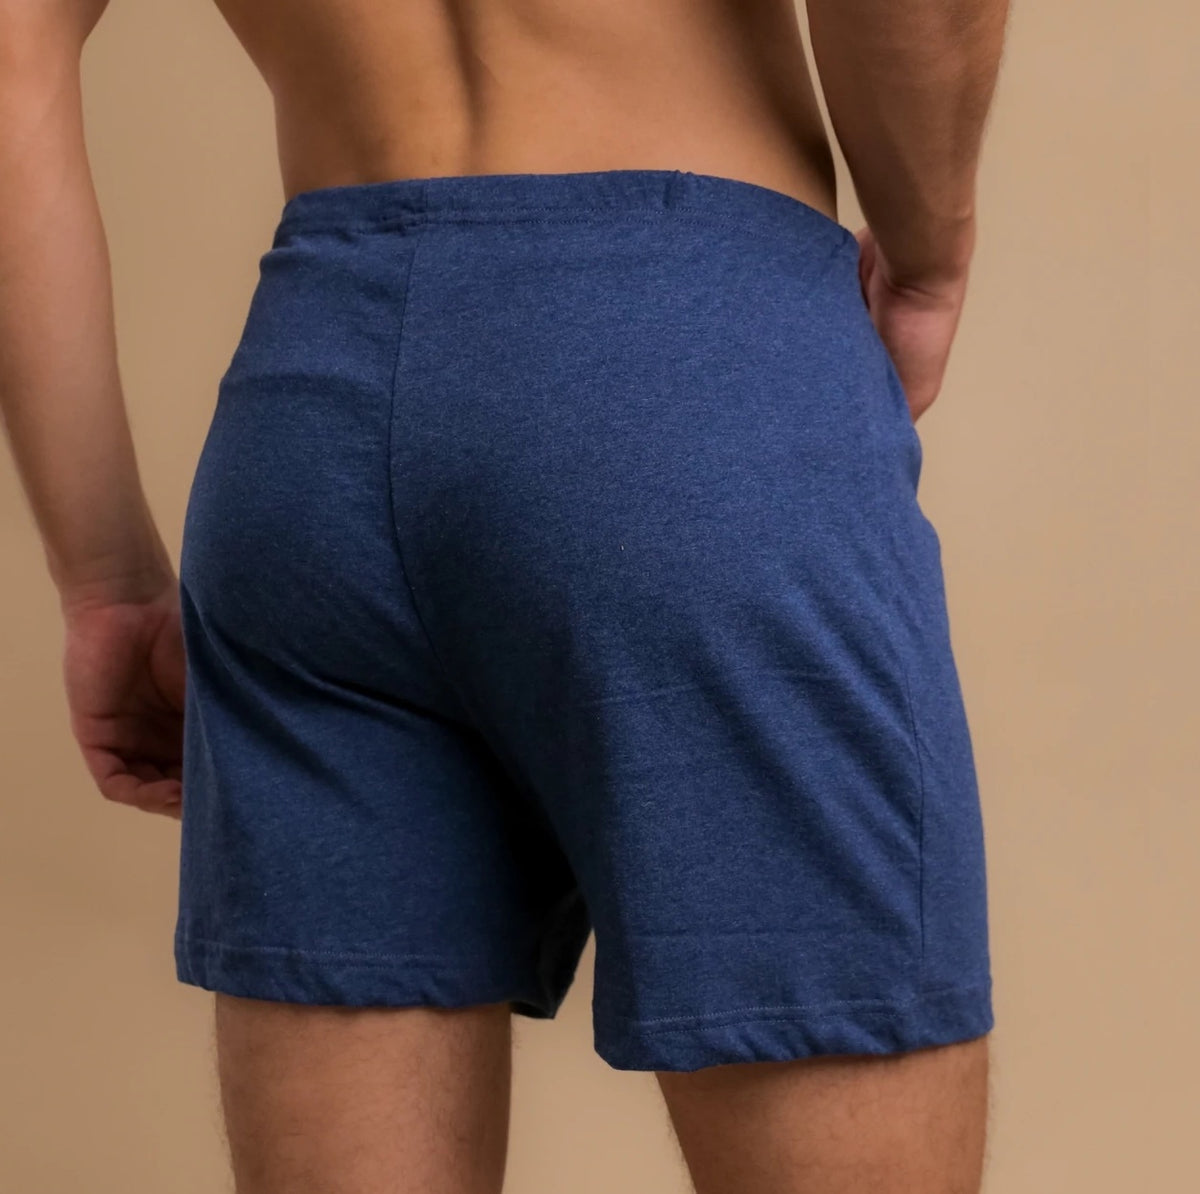 Mens Hemp Underwear Boxer Shorts - drawstring briefs - loose fit boxers for  men - Natural briefs ((XL) 36-38 inch waist)